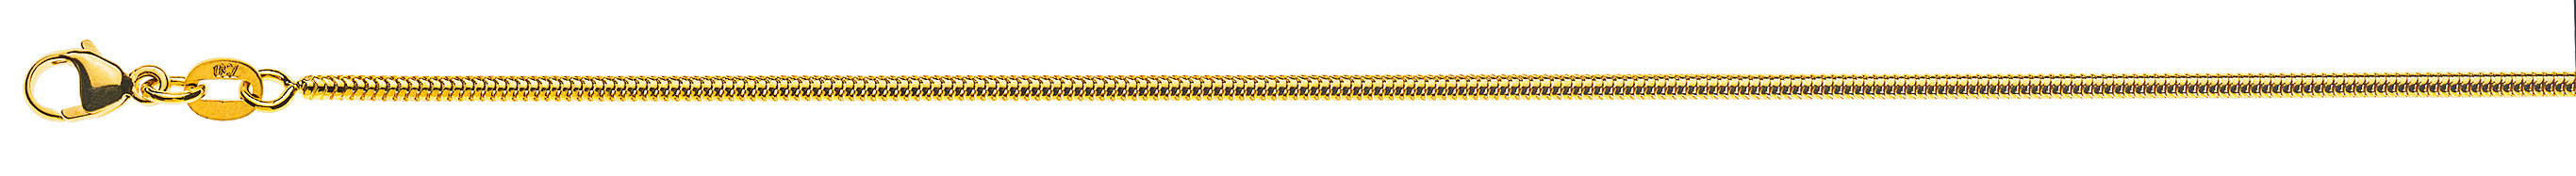 AURONOS Prestige Necklace yellow gold 18K snake chain 40cm 1.6mm